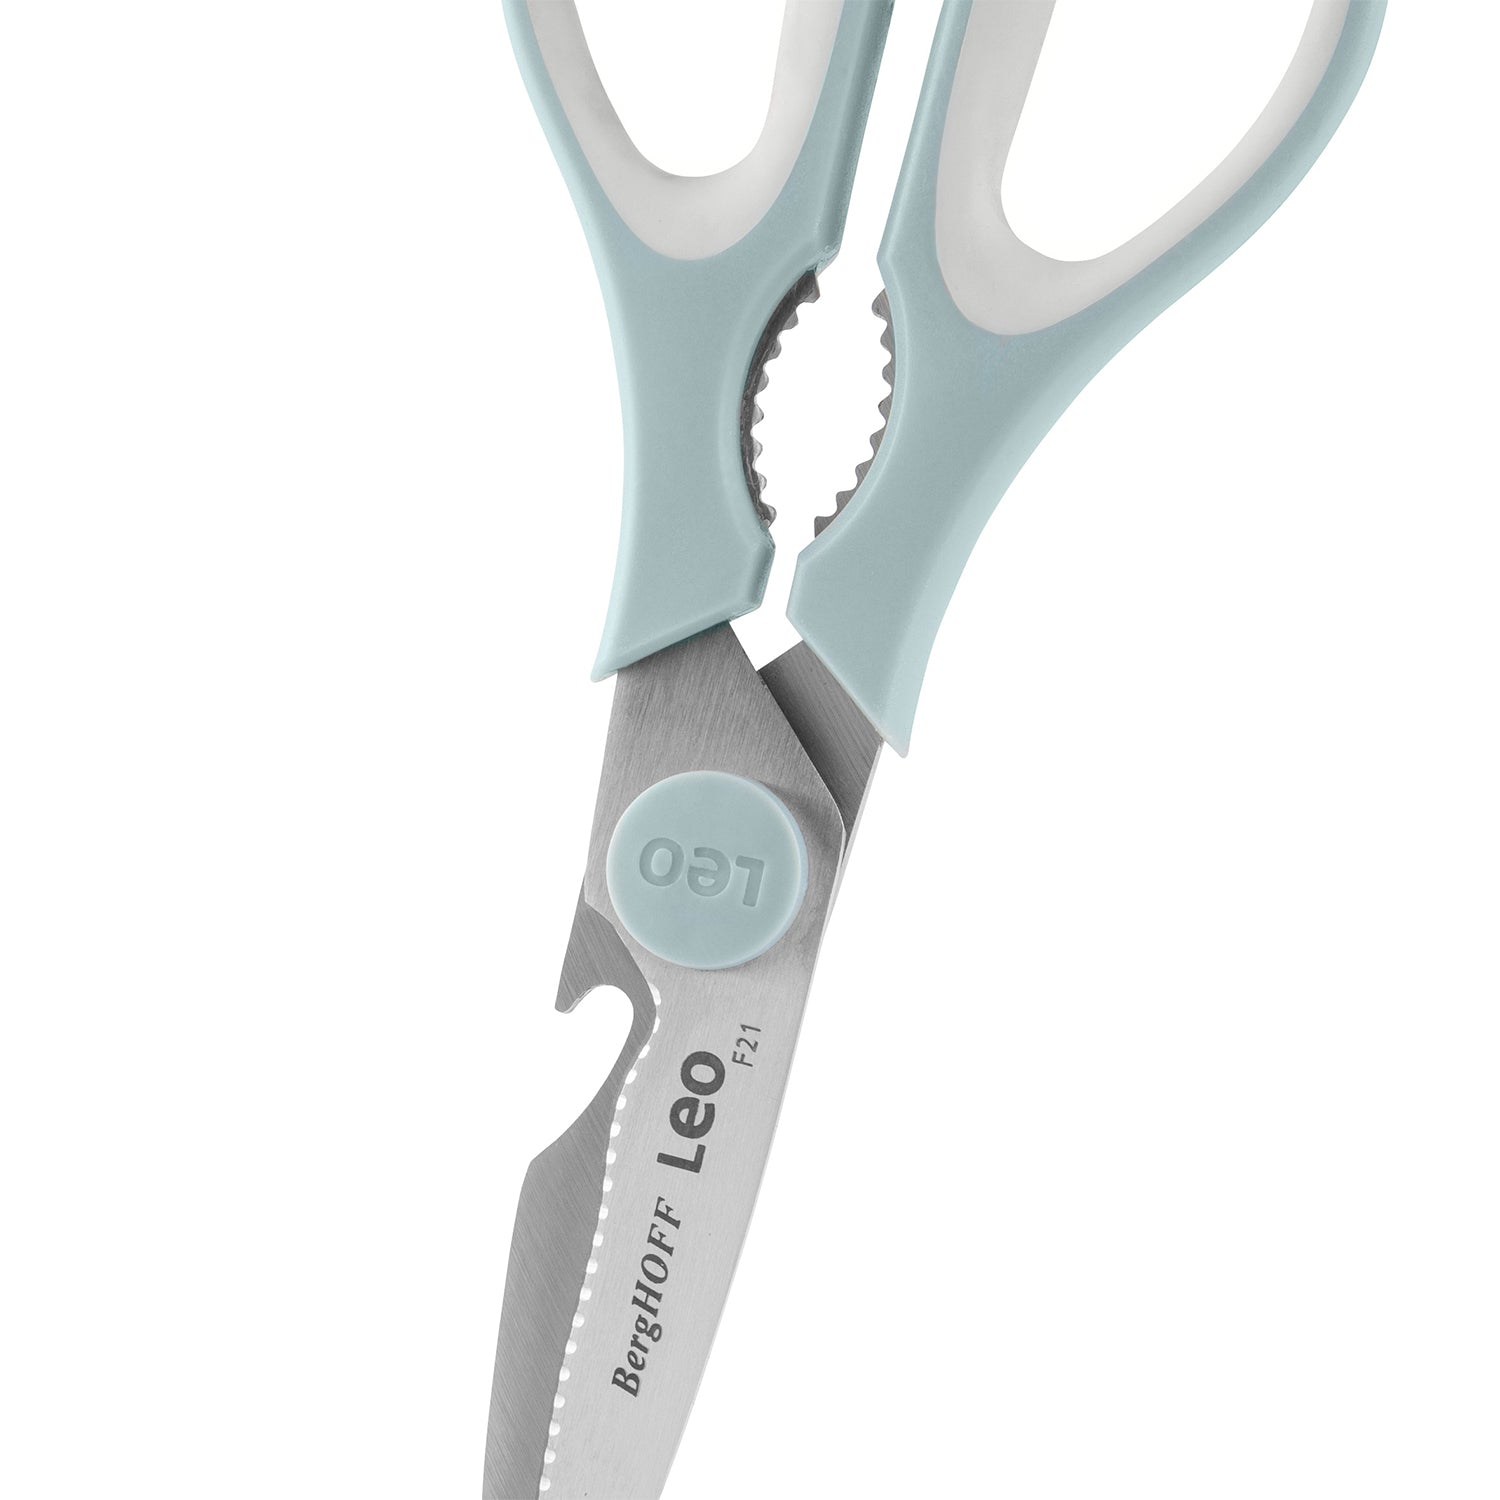 BergHOFF Essentials 10 Stainless Steel Scissors, Grey